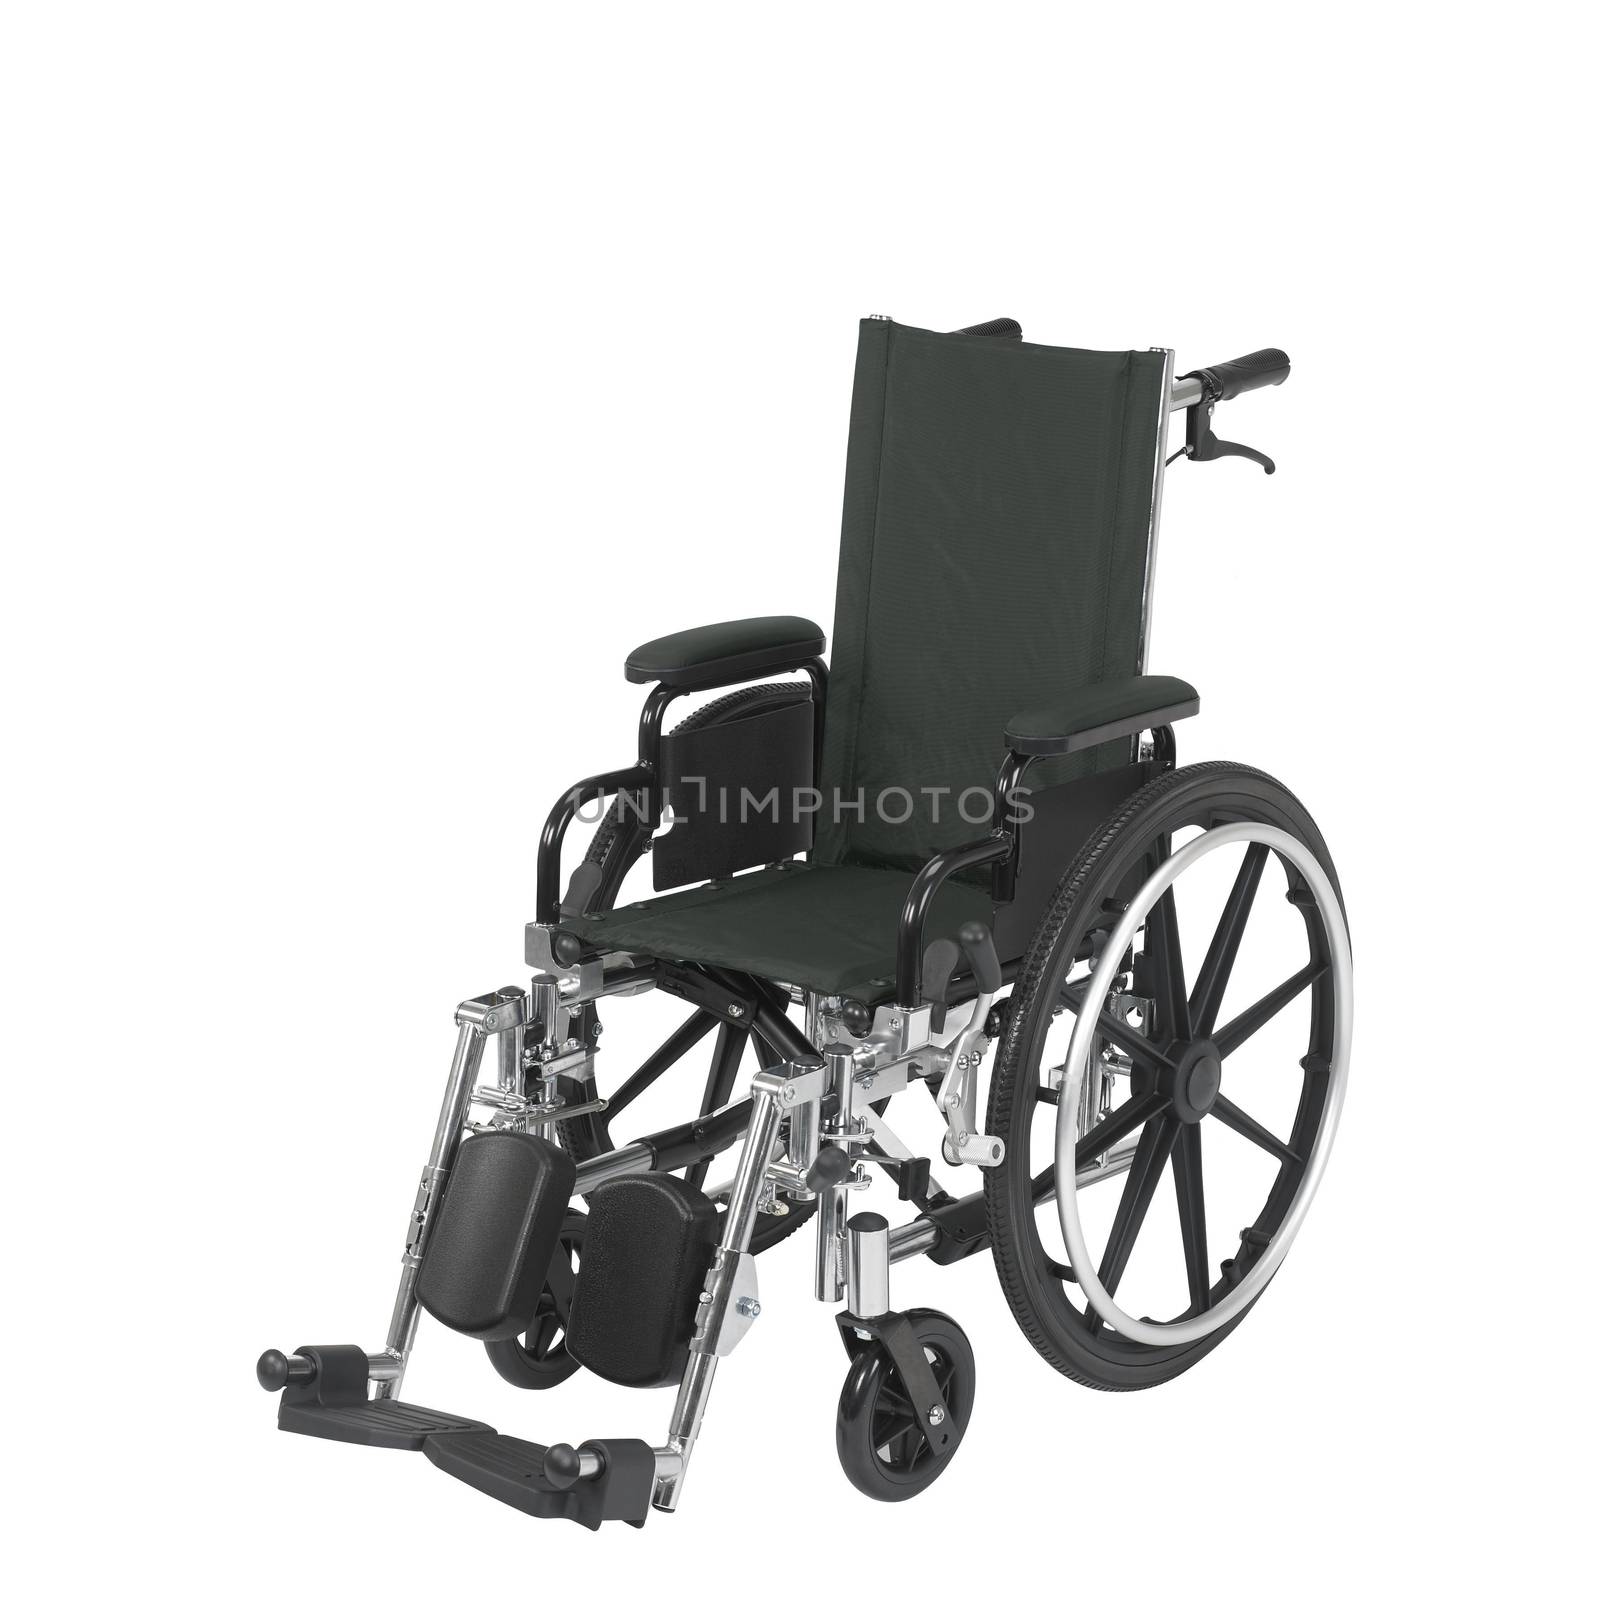 wheelchair under the white background by ozaiachin